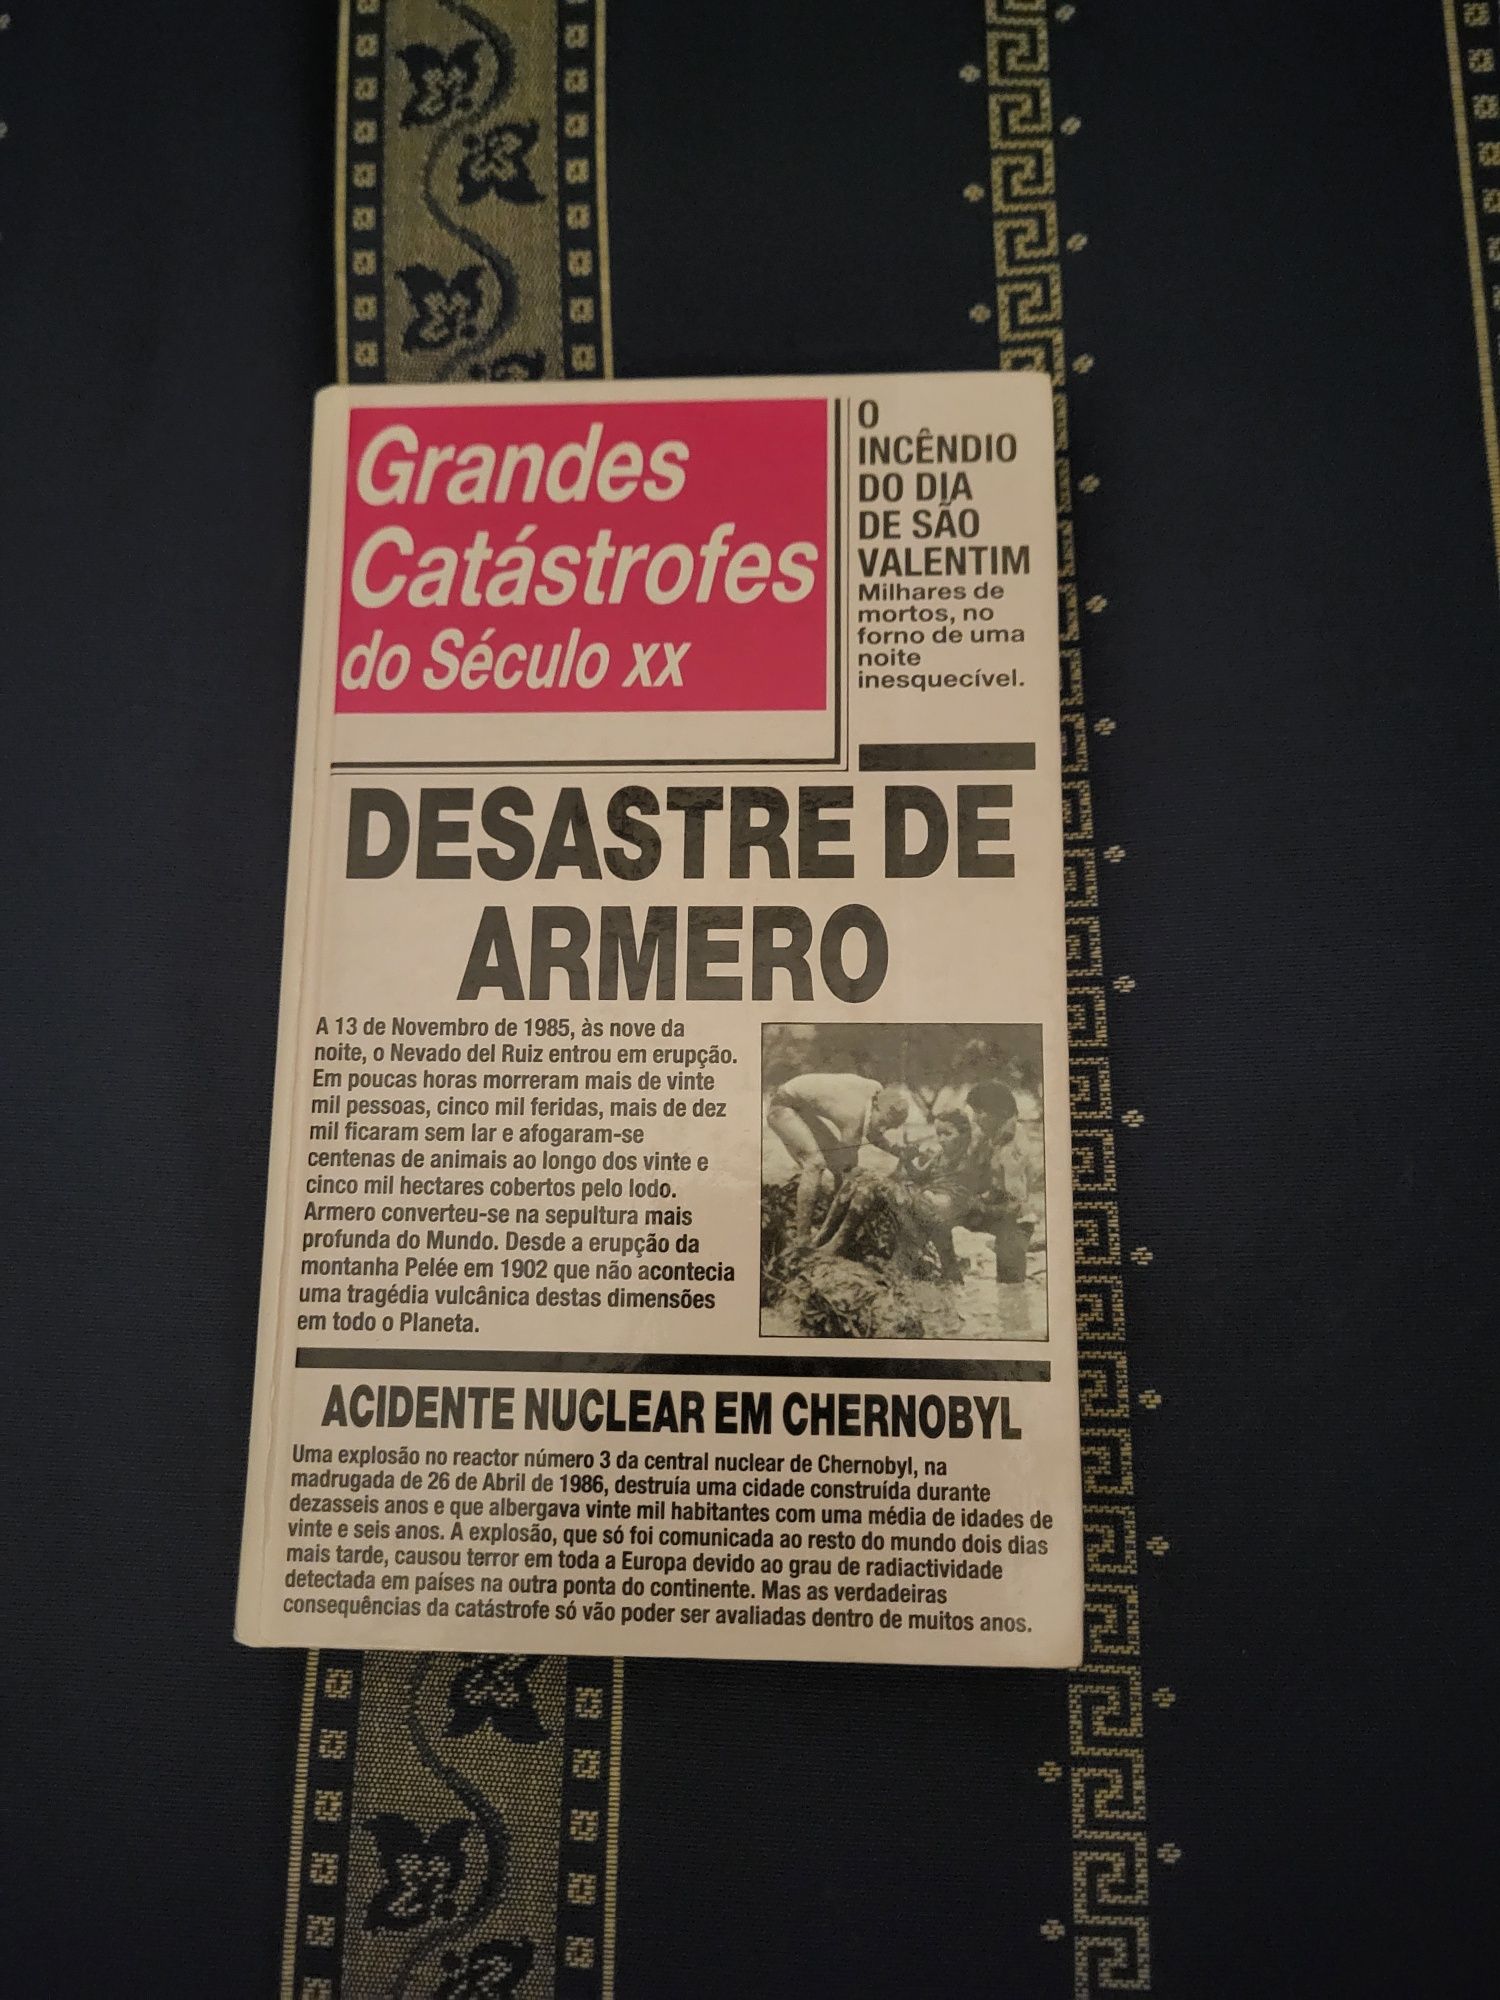 Livro "Grandes Catástrofes do Século XX Desastre de Armero"